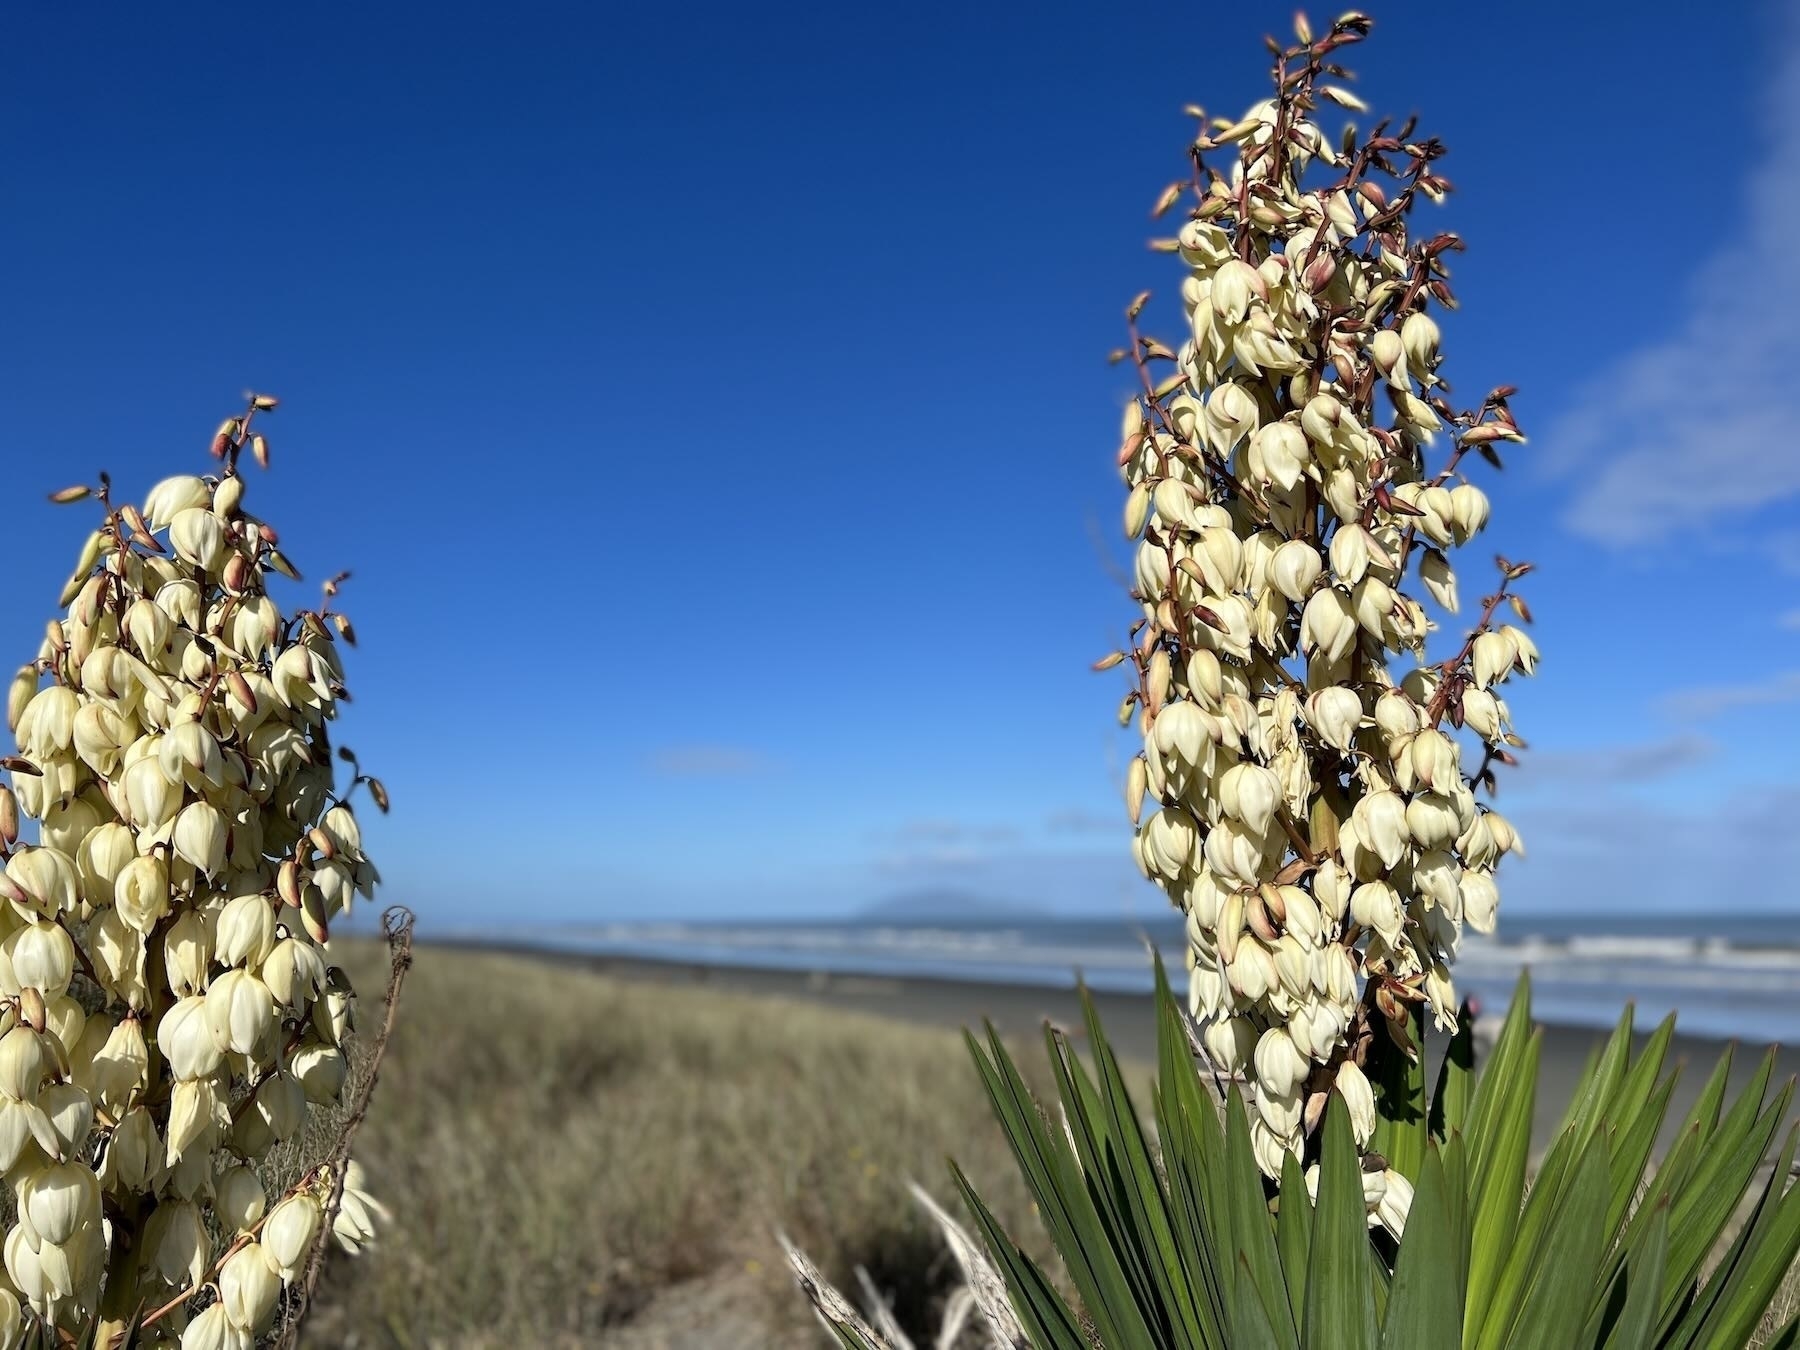 Yucca flowering in the dunes — closeup. 